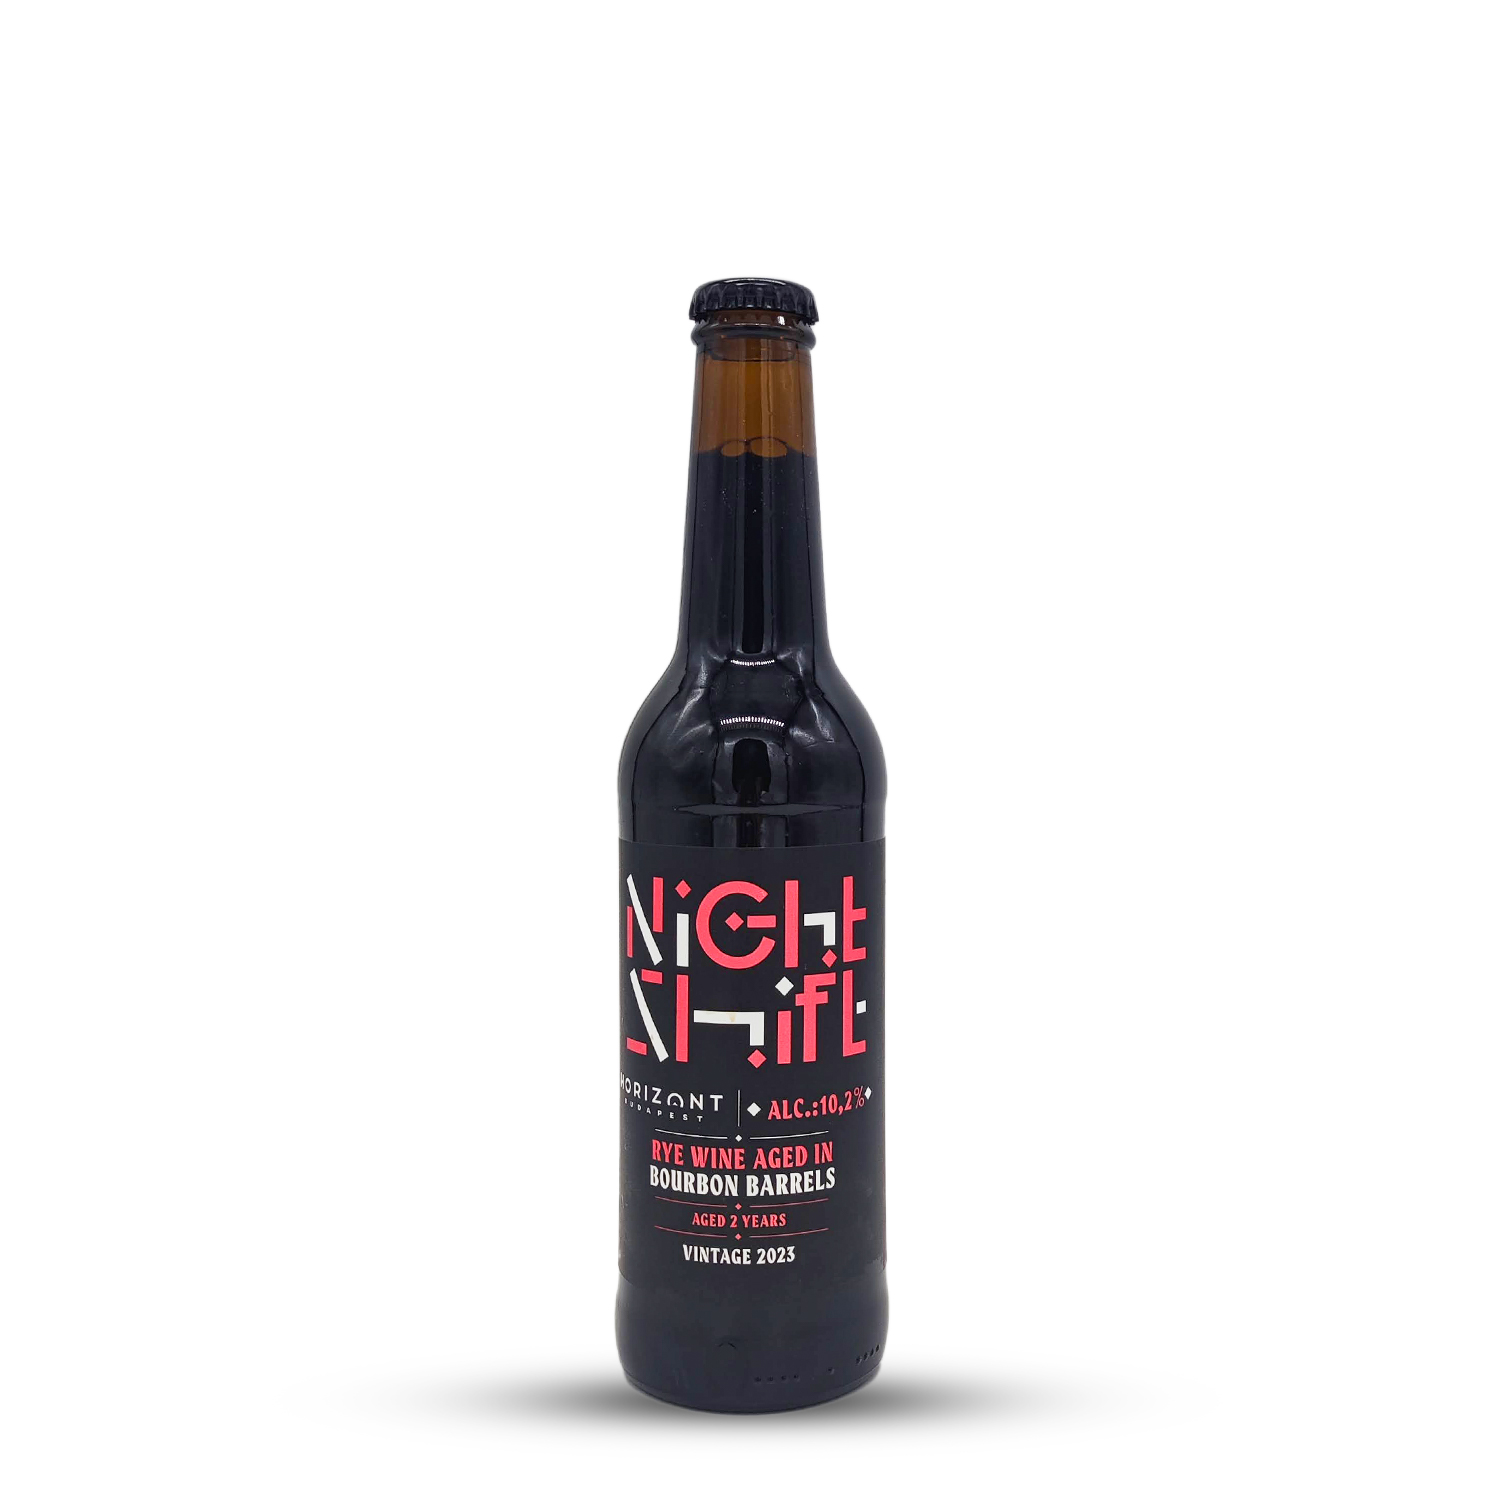 Night Shift Vintage 2023 Rye Wine Aged In Bourbon Barrels | Horizont (HU) | 0,33L - 10,2%